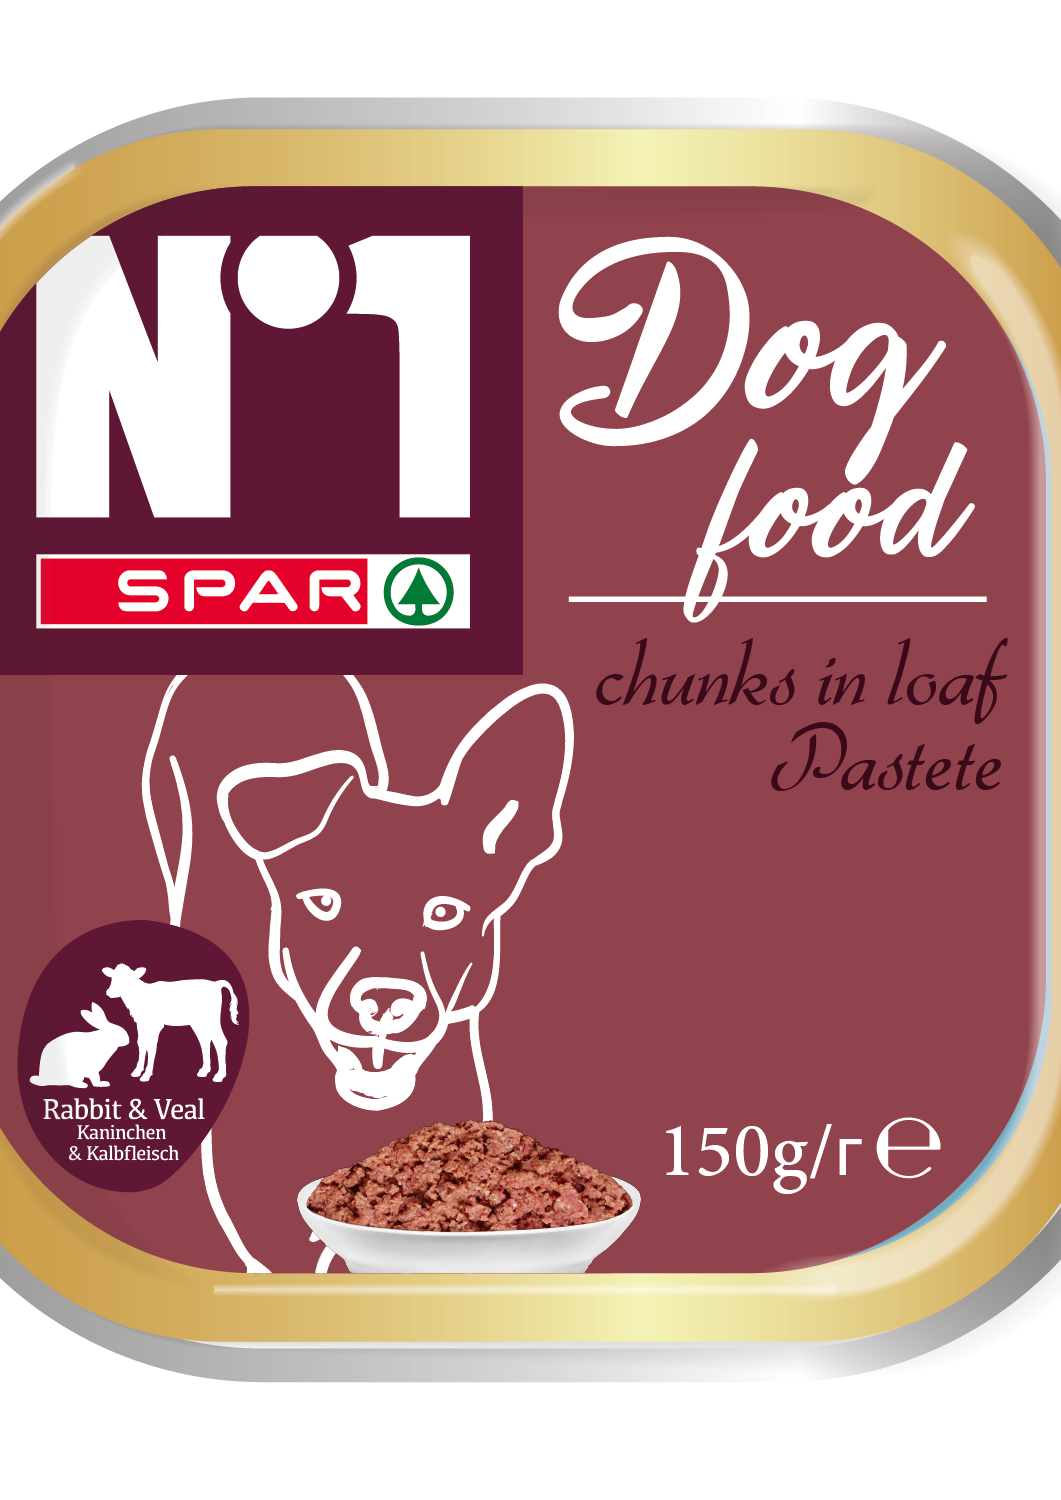 SPAR's own-brand pet food range is here